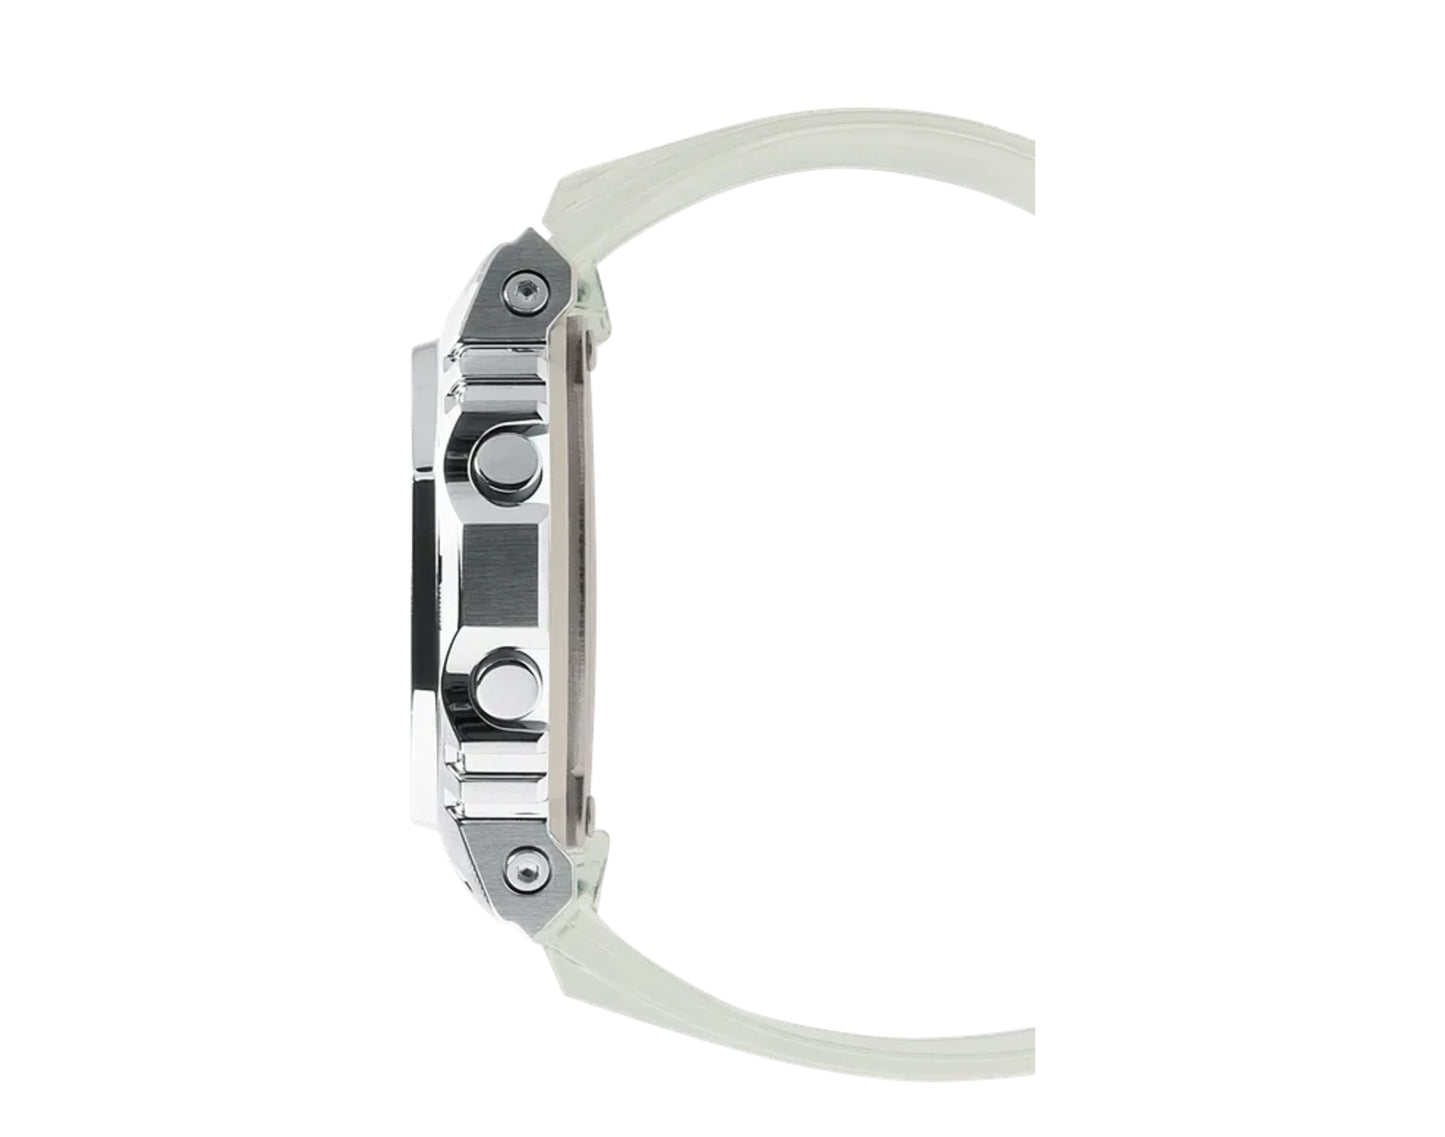 Casio G-Shock GM5600 Digital Metal and Resin Silver Camo Watch GM5600SCM-1